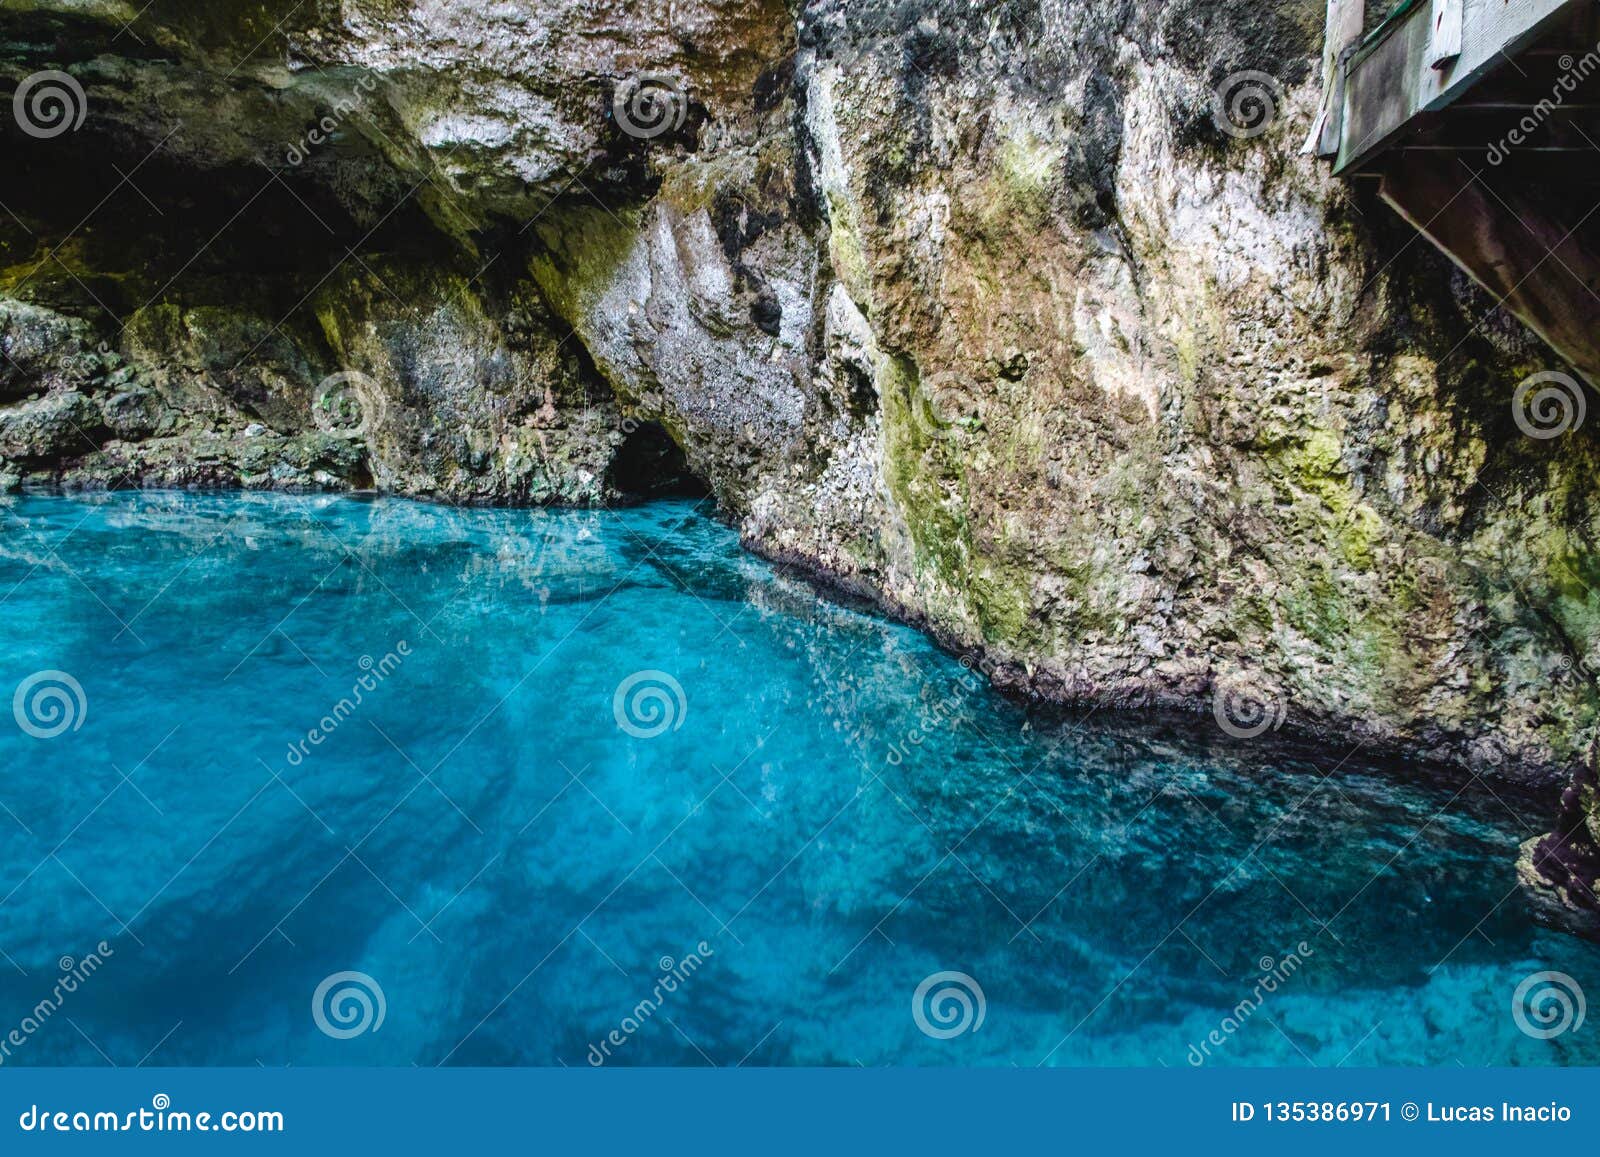 hoyo azul in punta cana, dominican republic